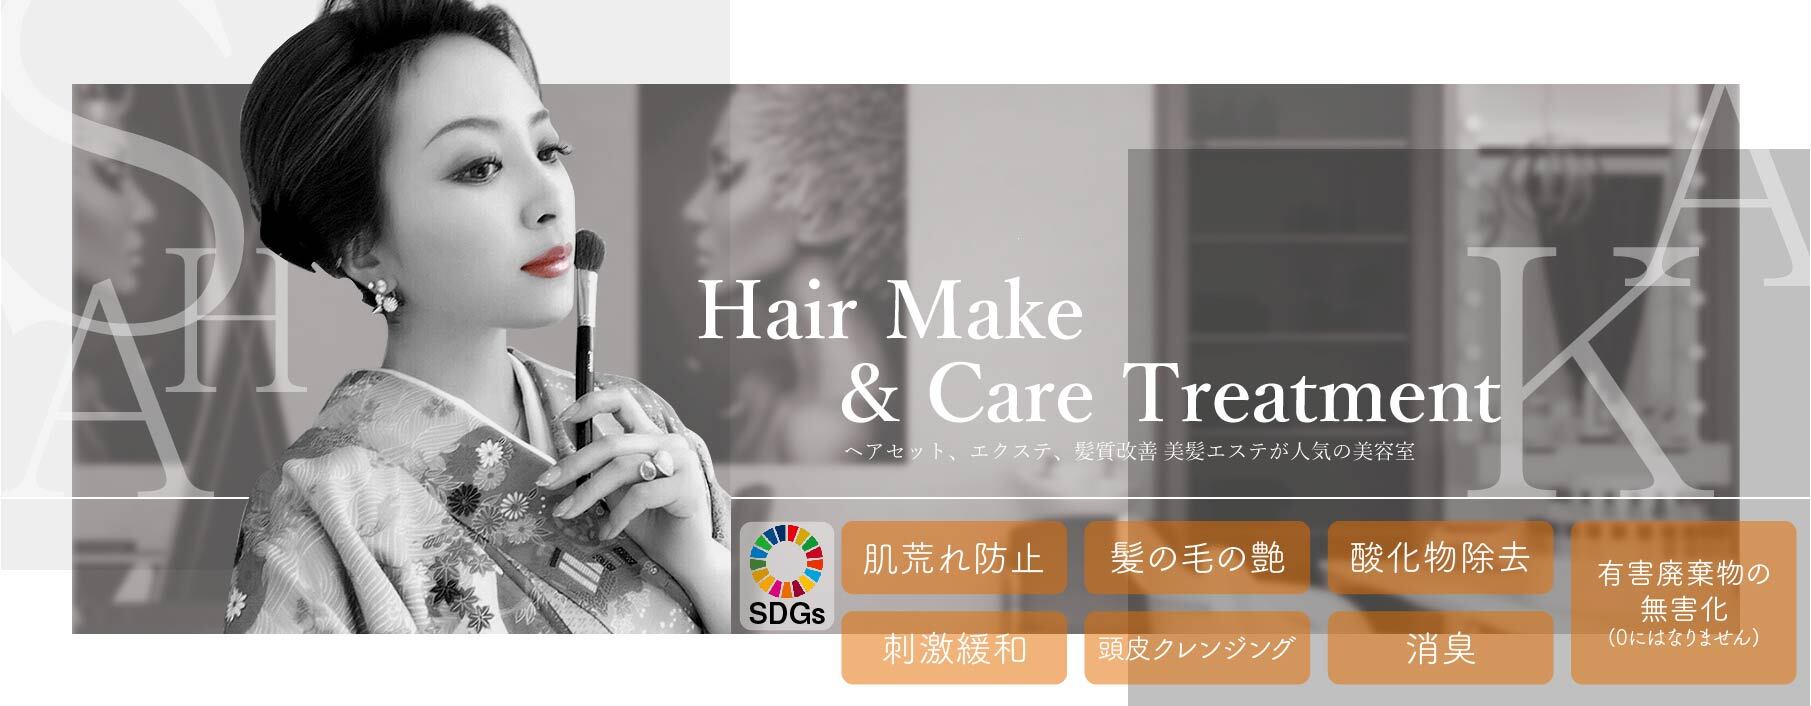 Hair Make & Care Treatment ヘアセット、エクステ、髪質改善 美髪エステが人気の美容室